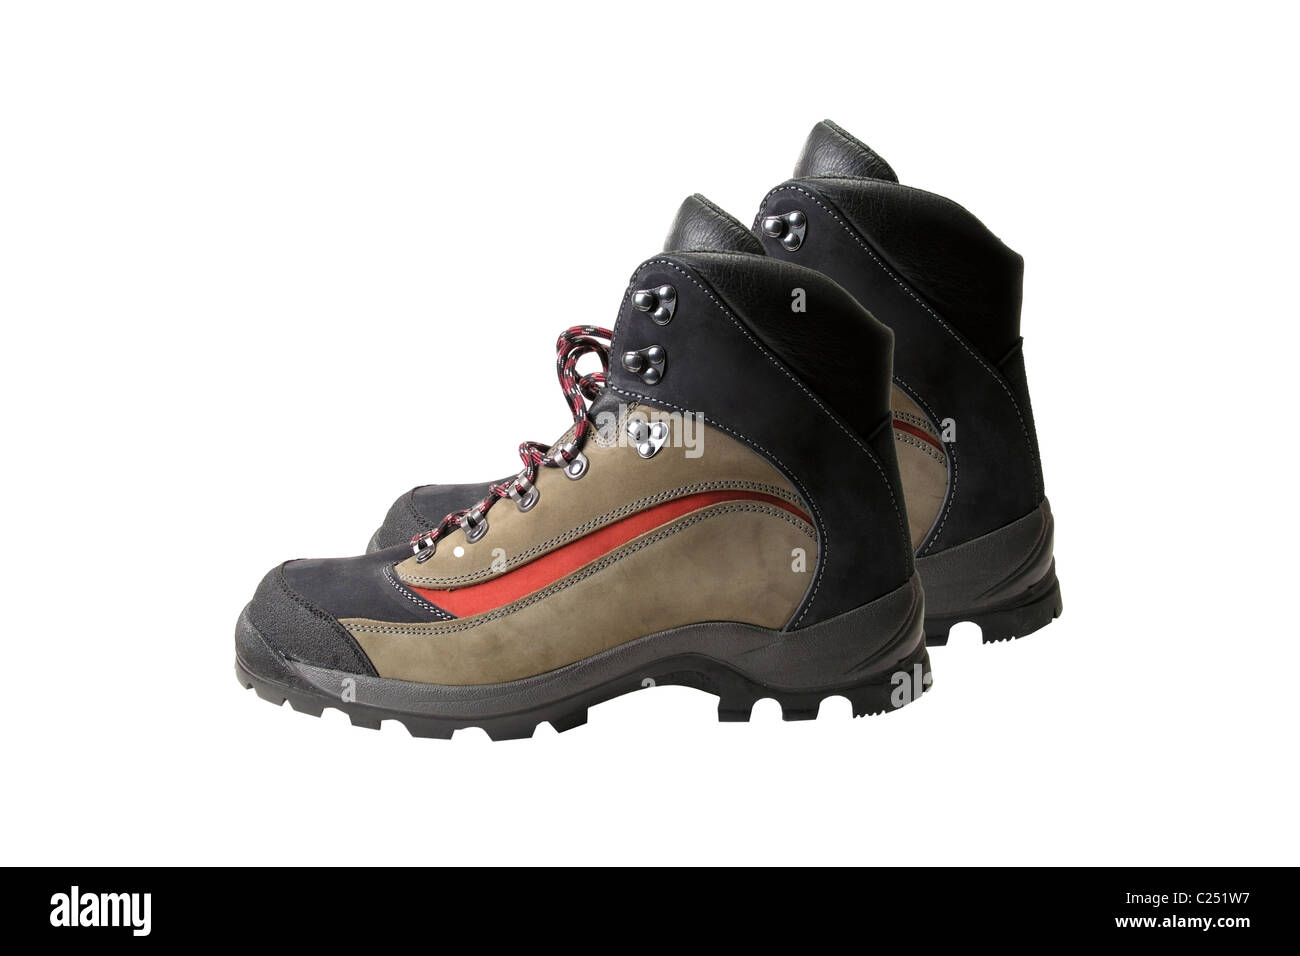 Fashion hiking boots isolated on white background Stock Photo